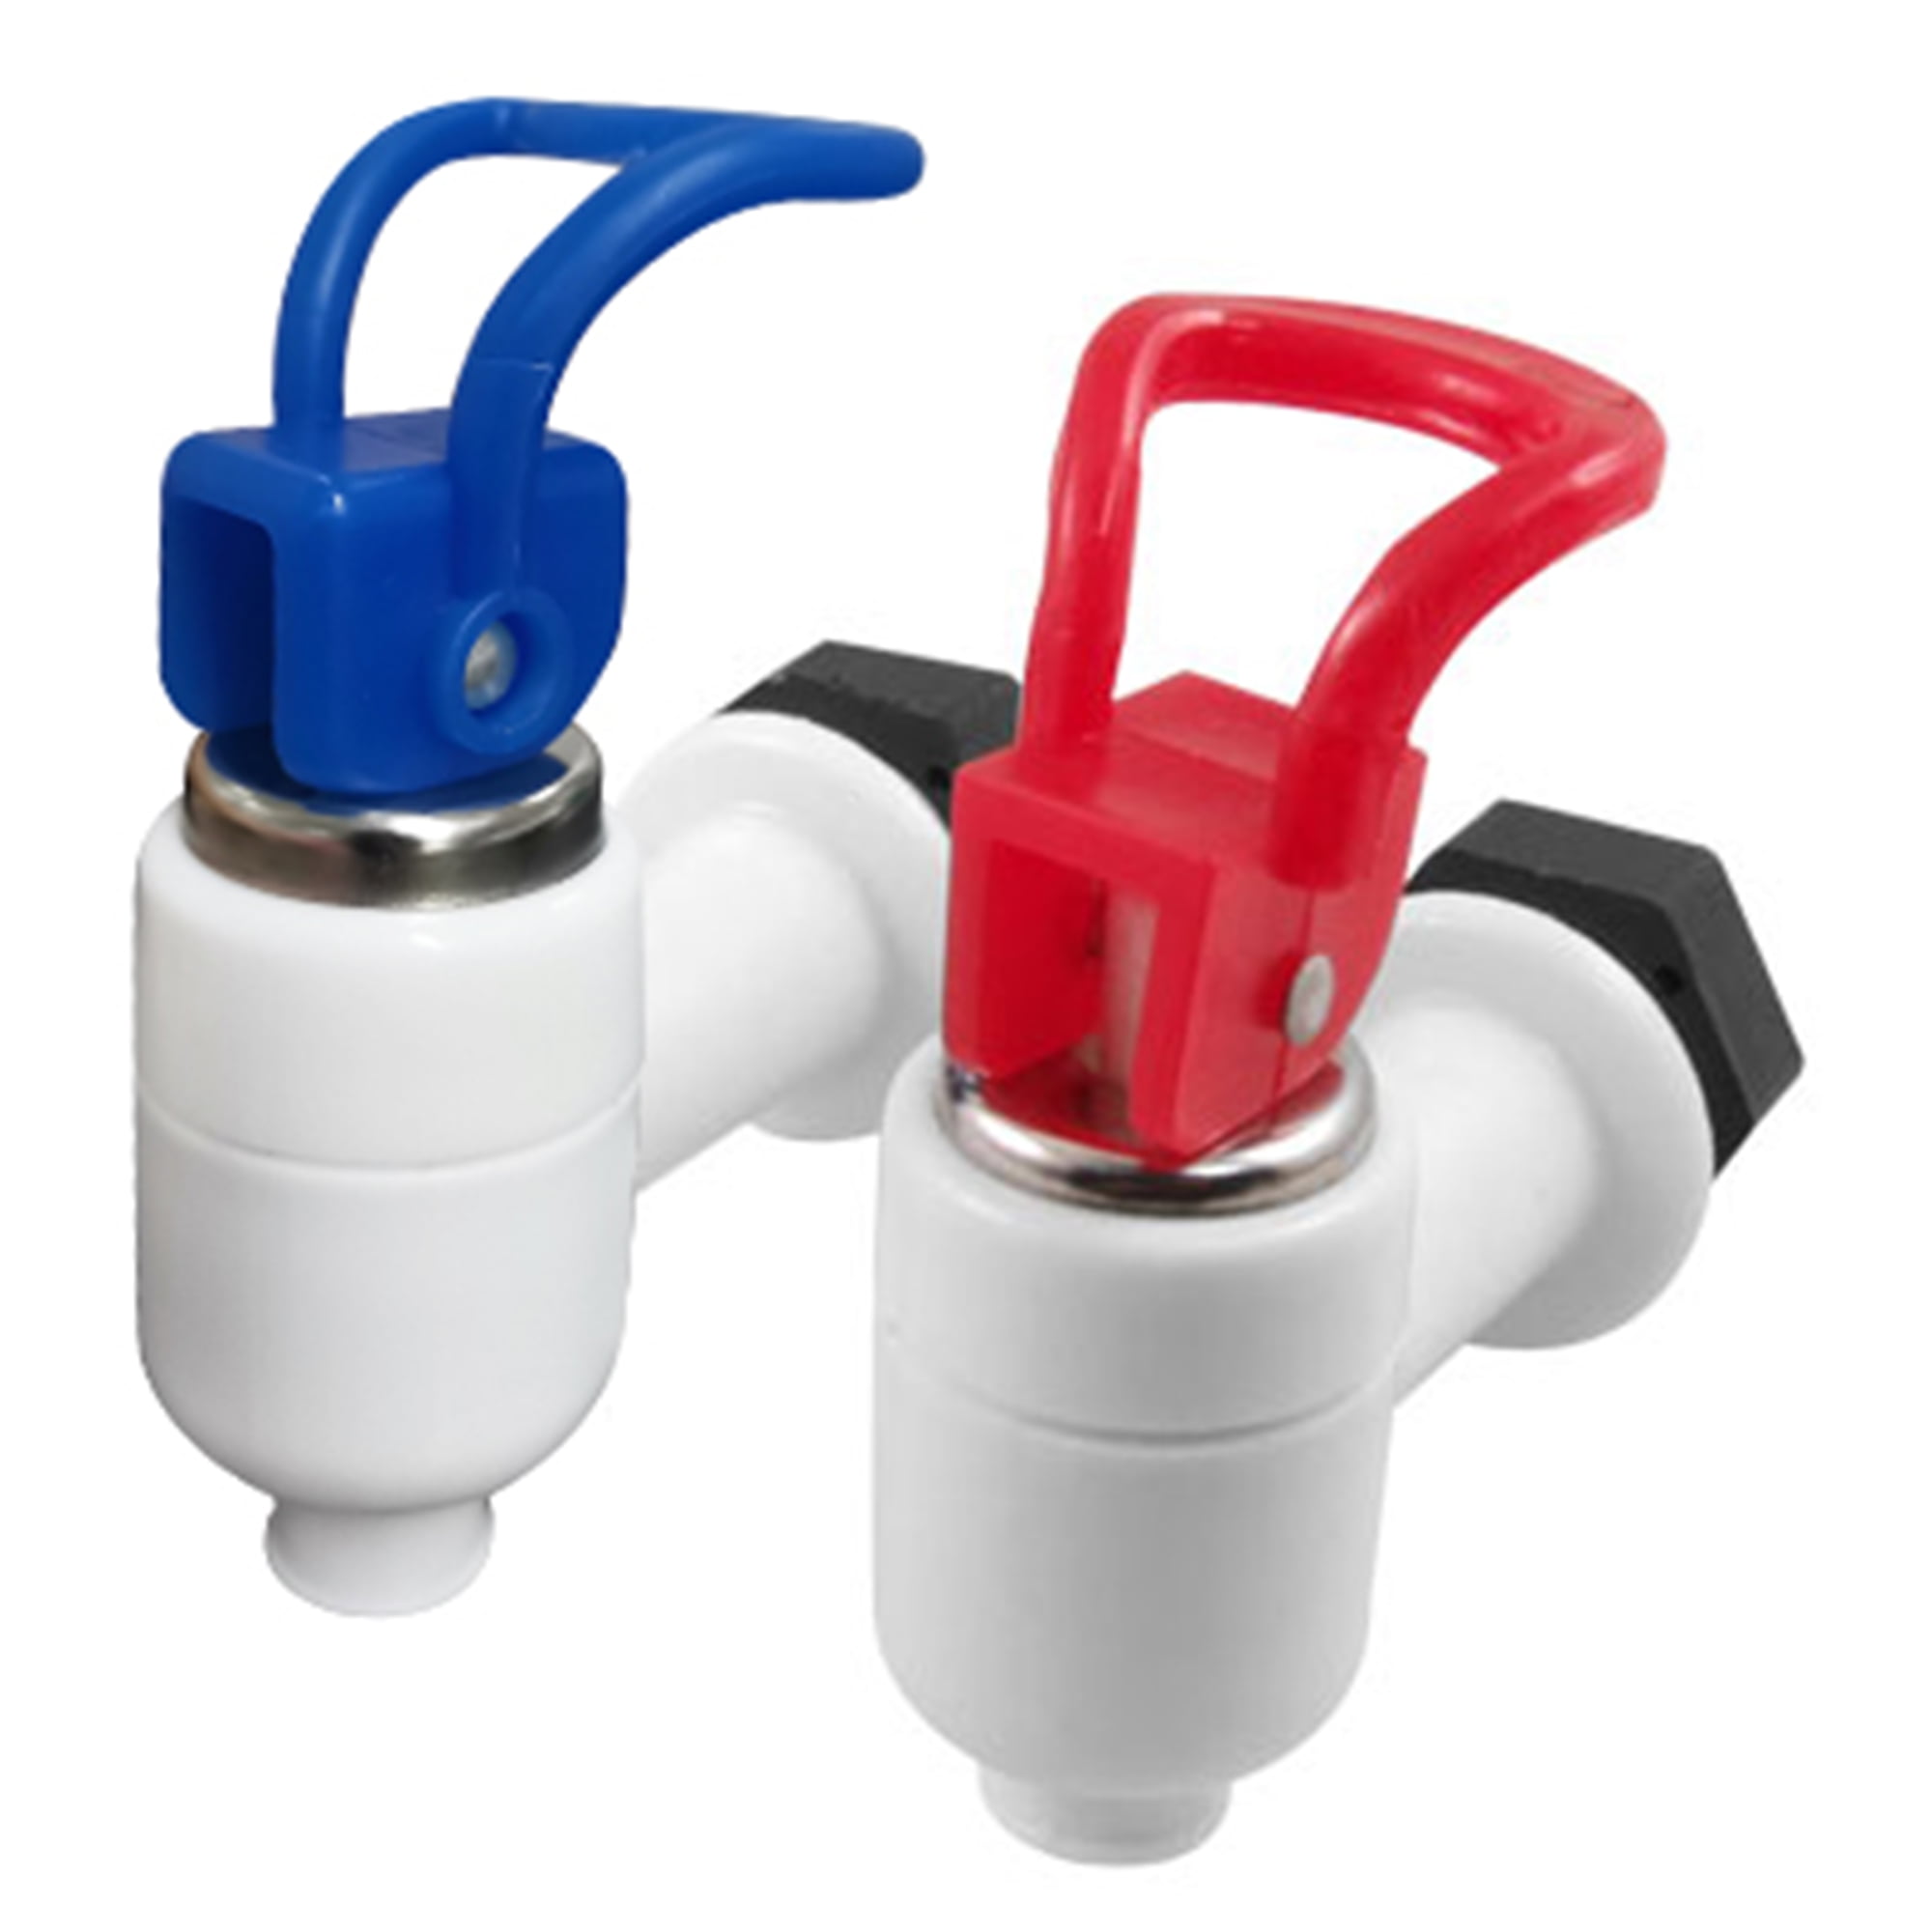 Plastic Water Dispenser Machine Faucet Tap 2Pcs a set Red & Blue High Quality 